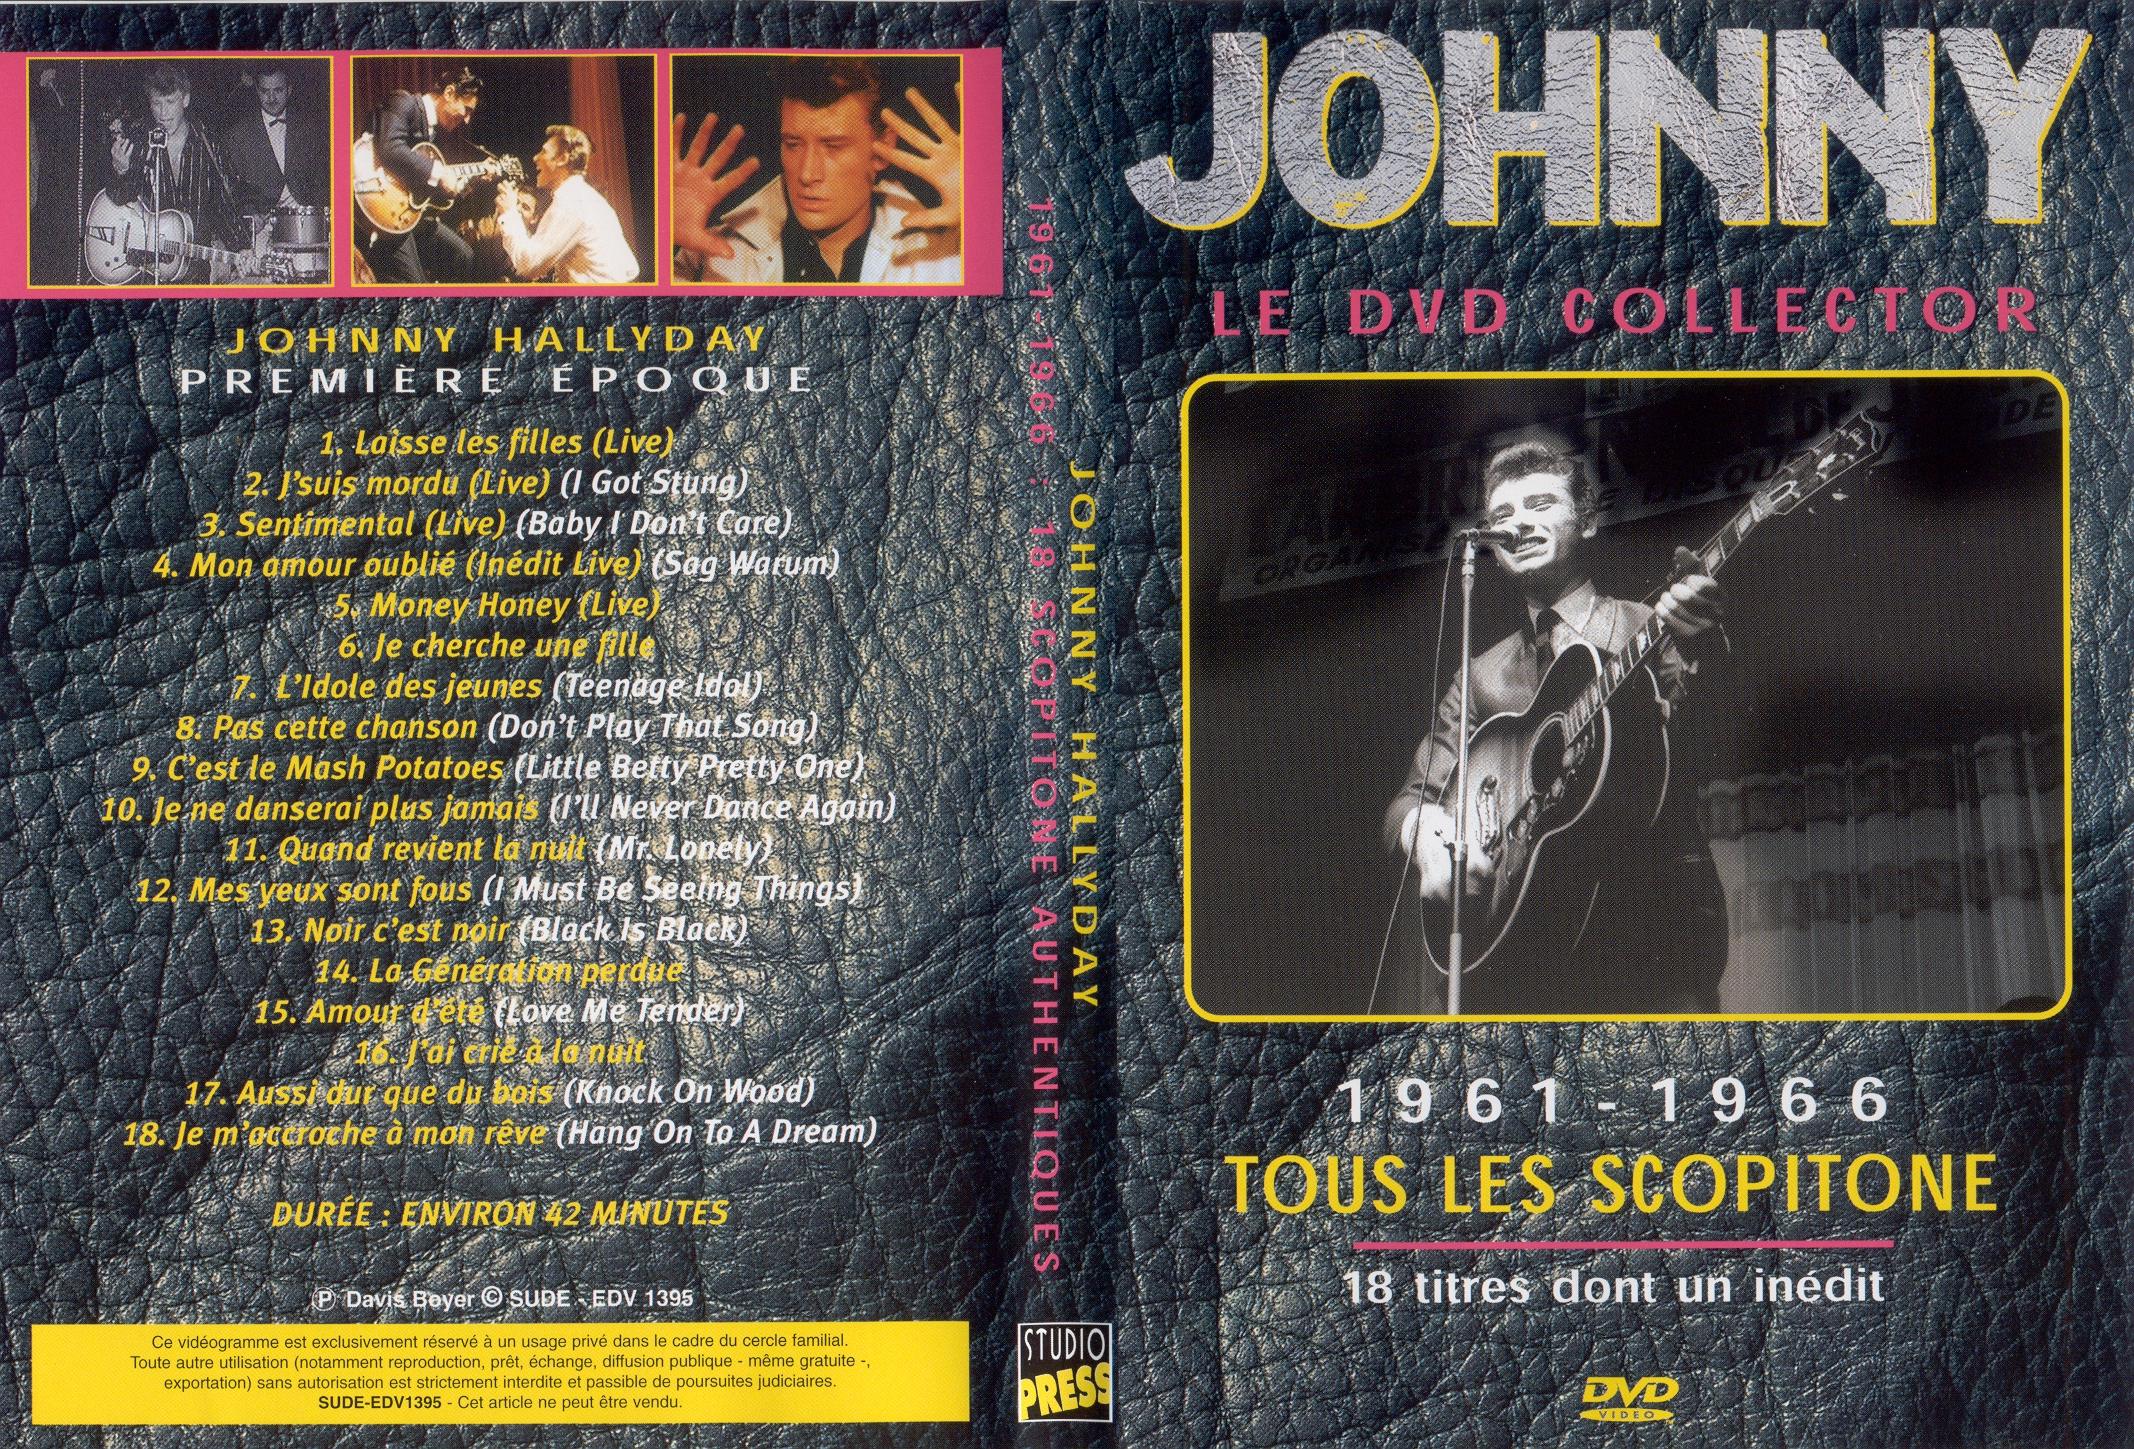 Jaquette DVD Johnny Hallyday 1961-66